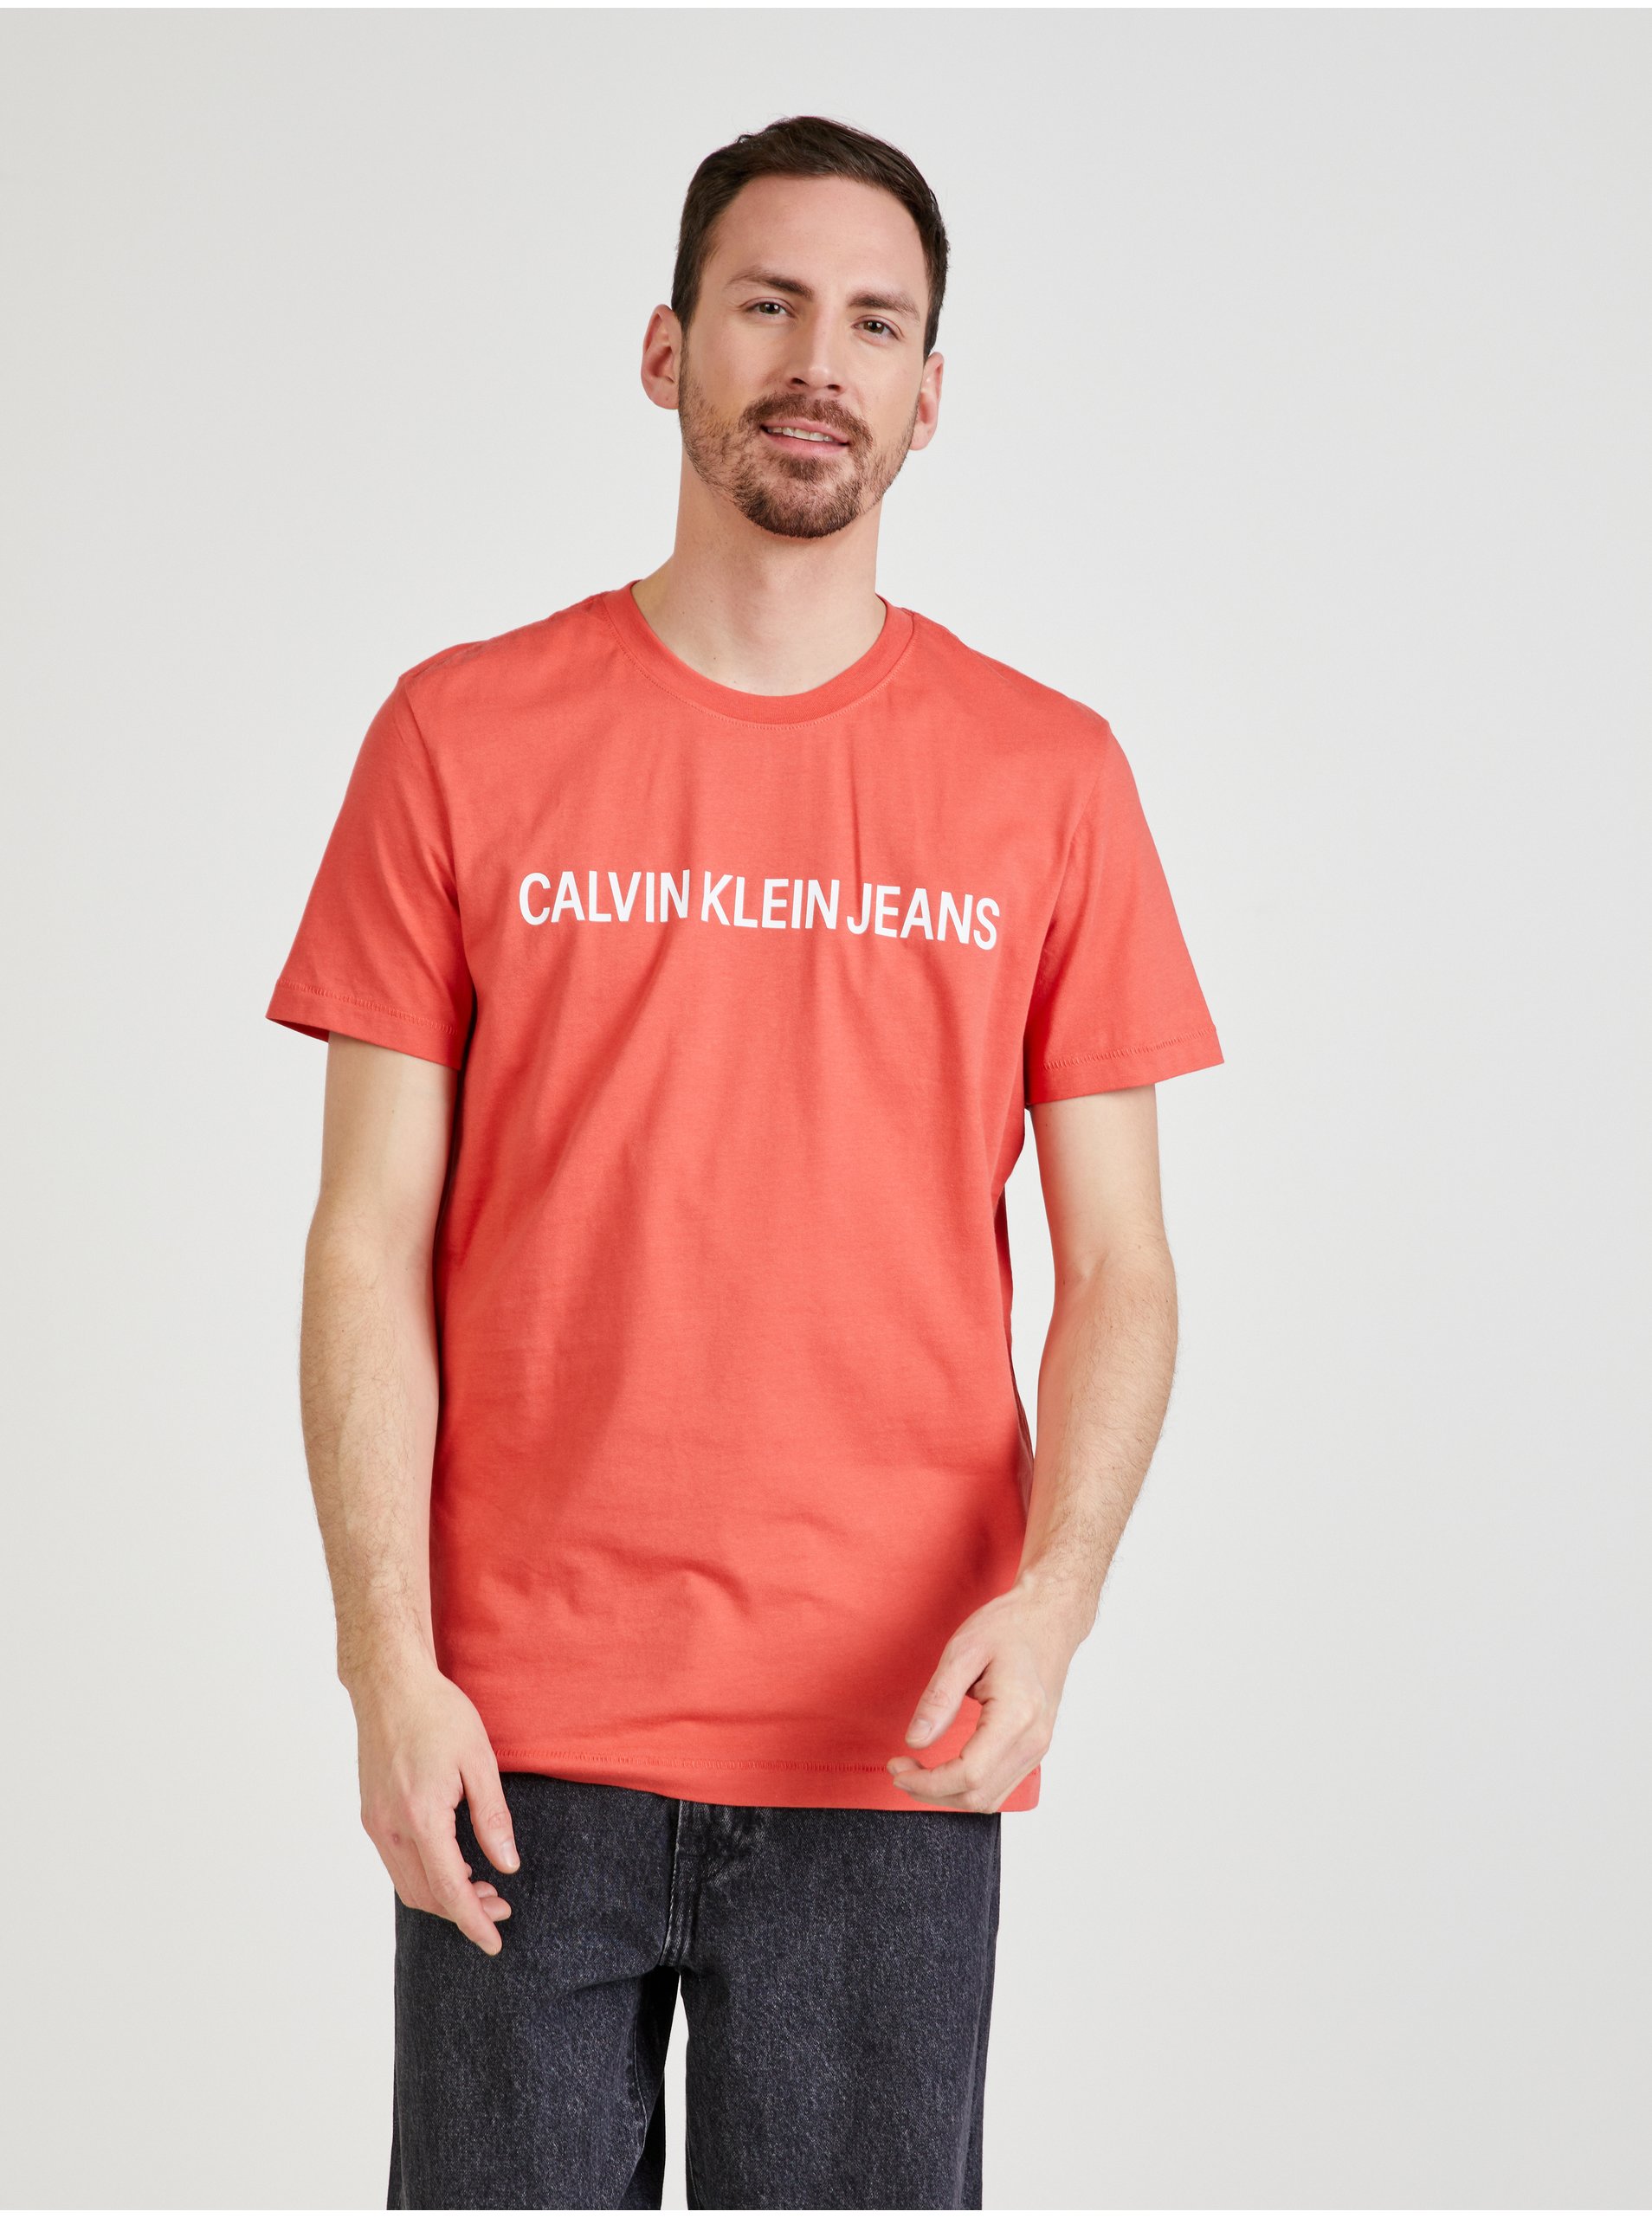 Men's Coral T-Shirt with Calvin Klein Jeans Print - Men's